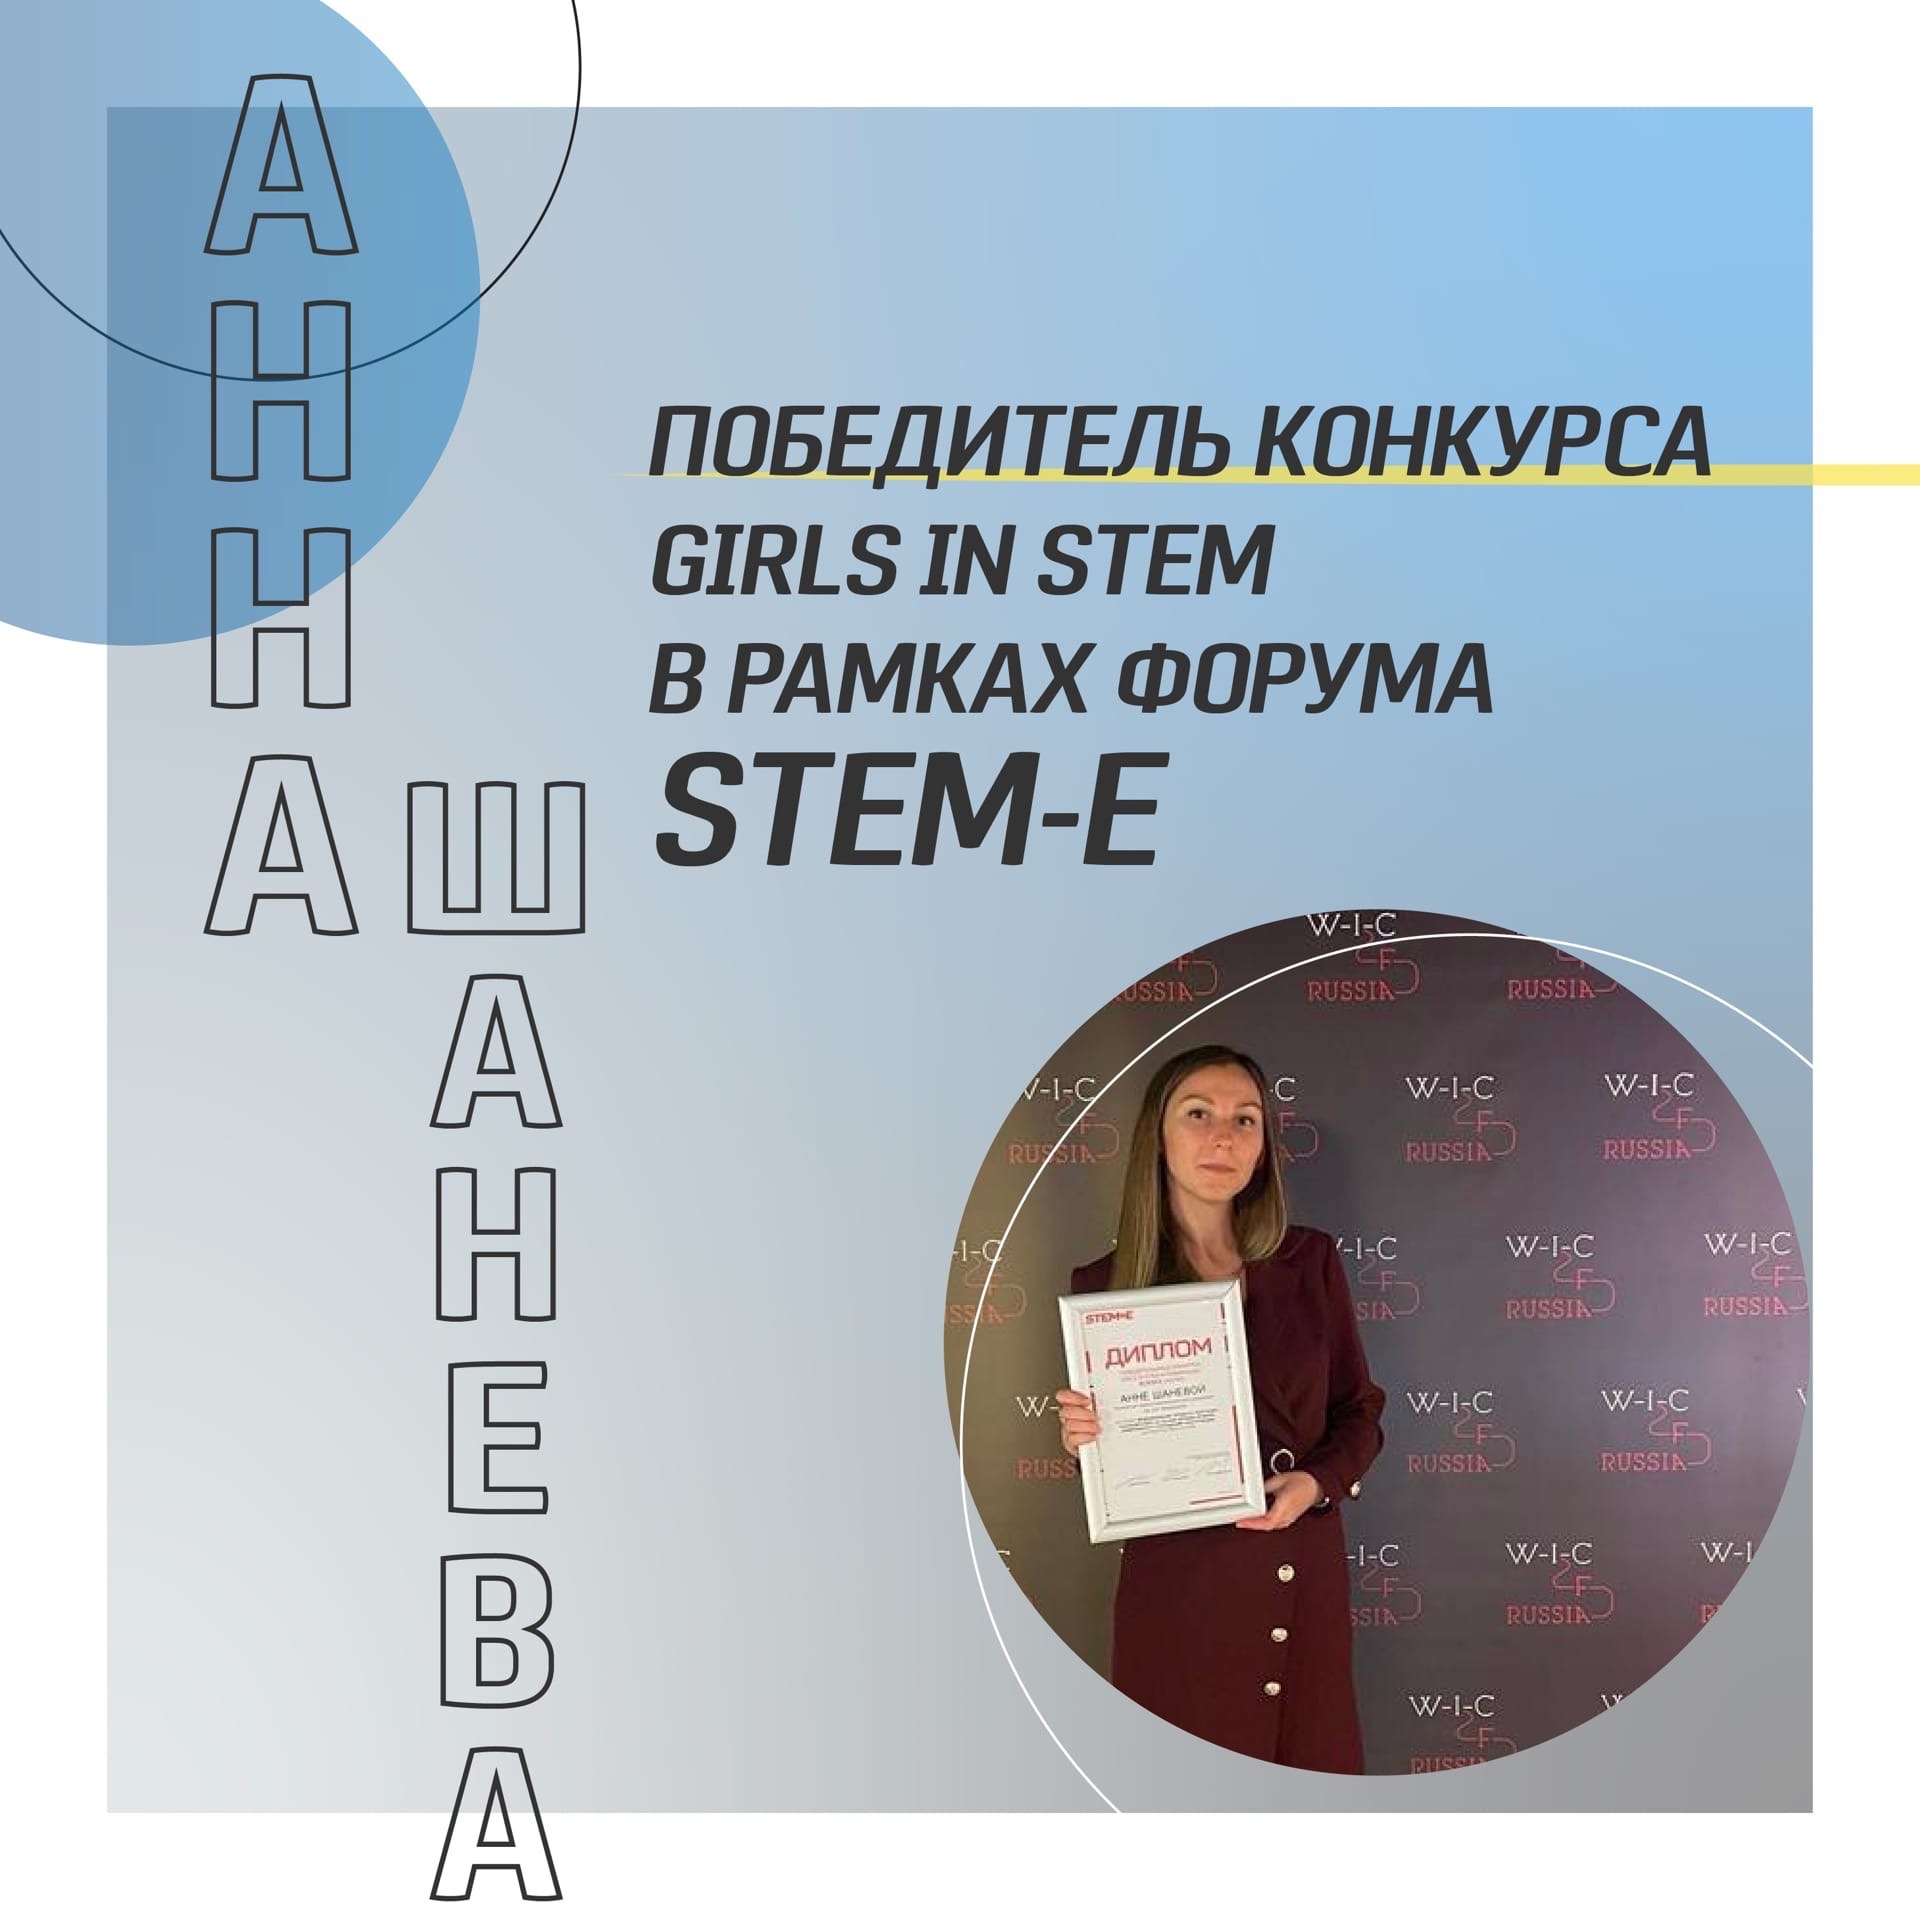 Анна Шанева - победительницей конкурса «Girls in STEM» в номинации Science